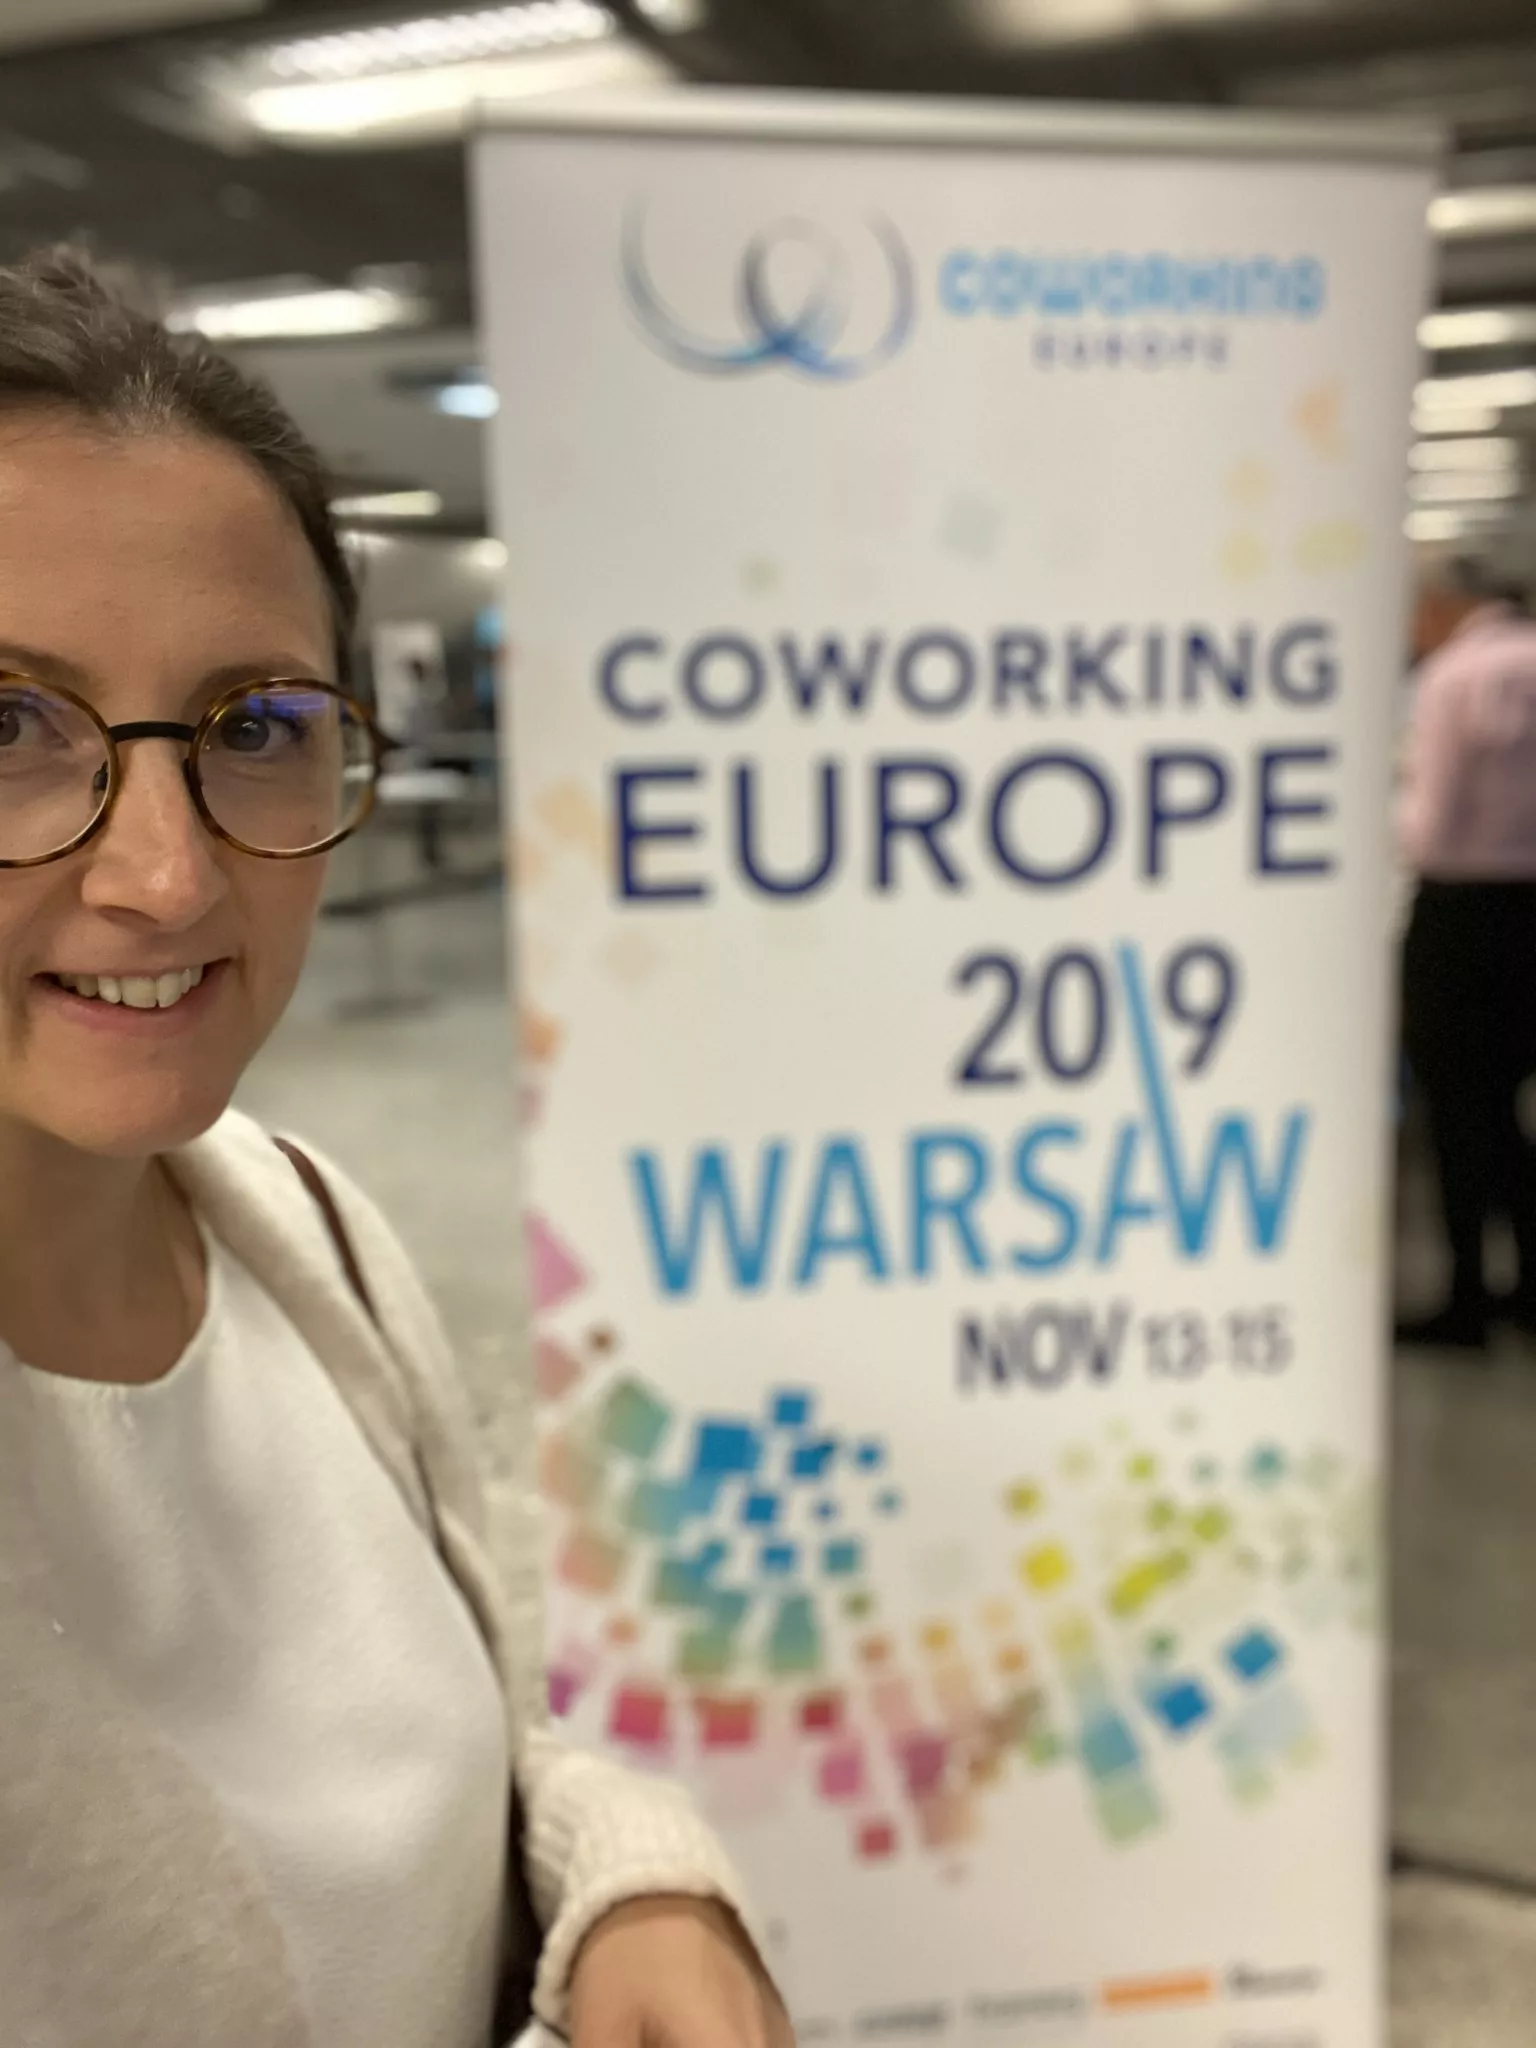 Coworking europe 2019